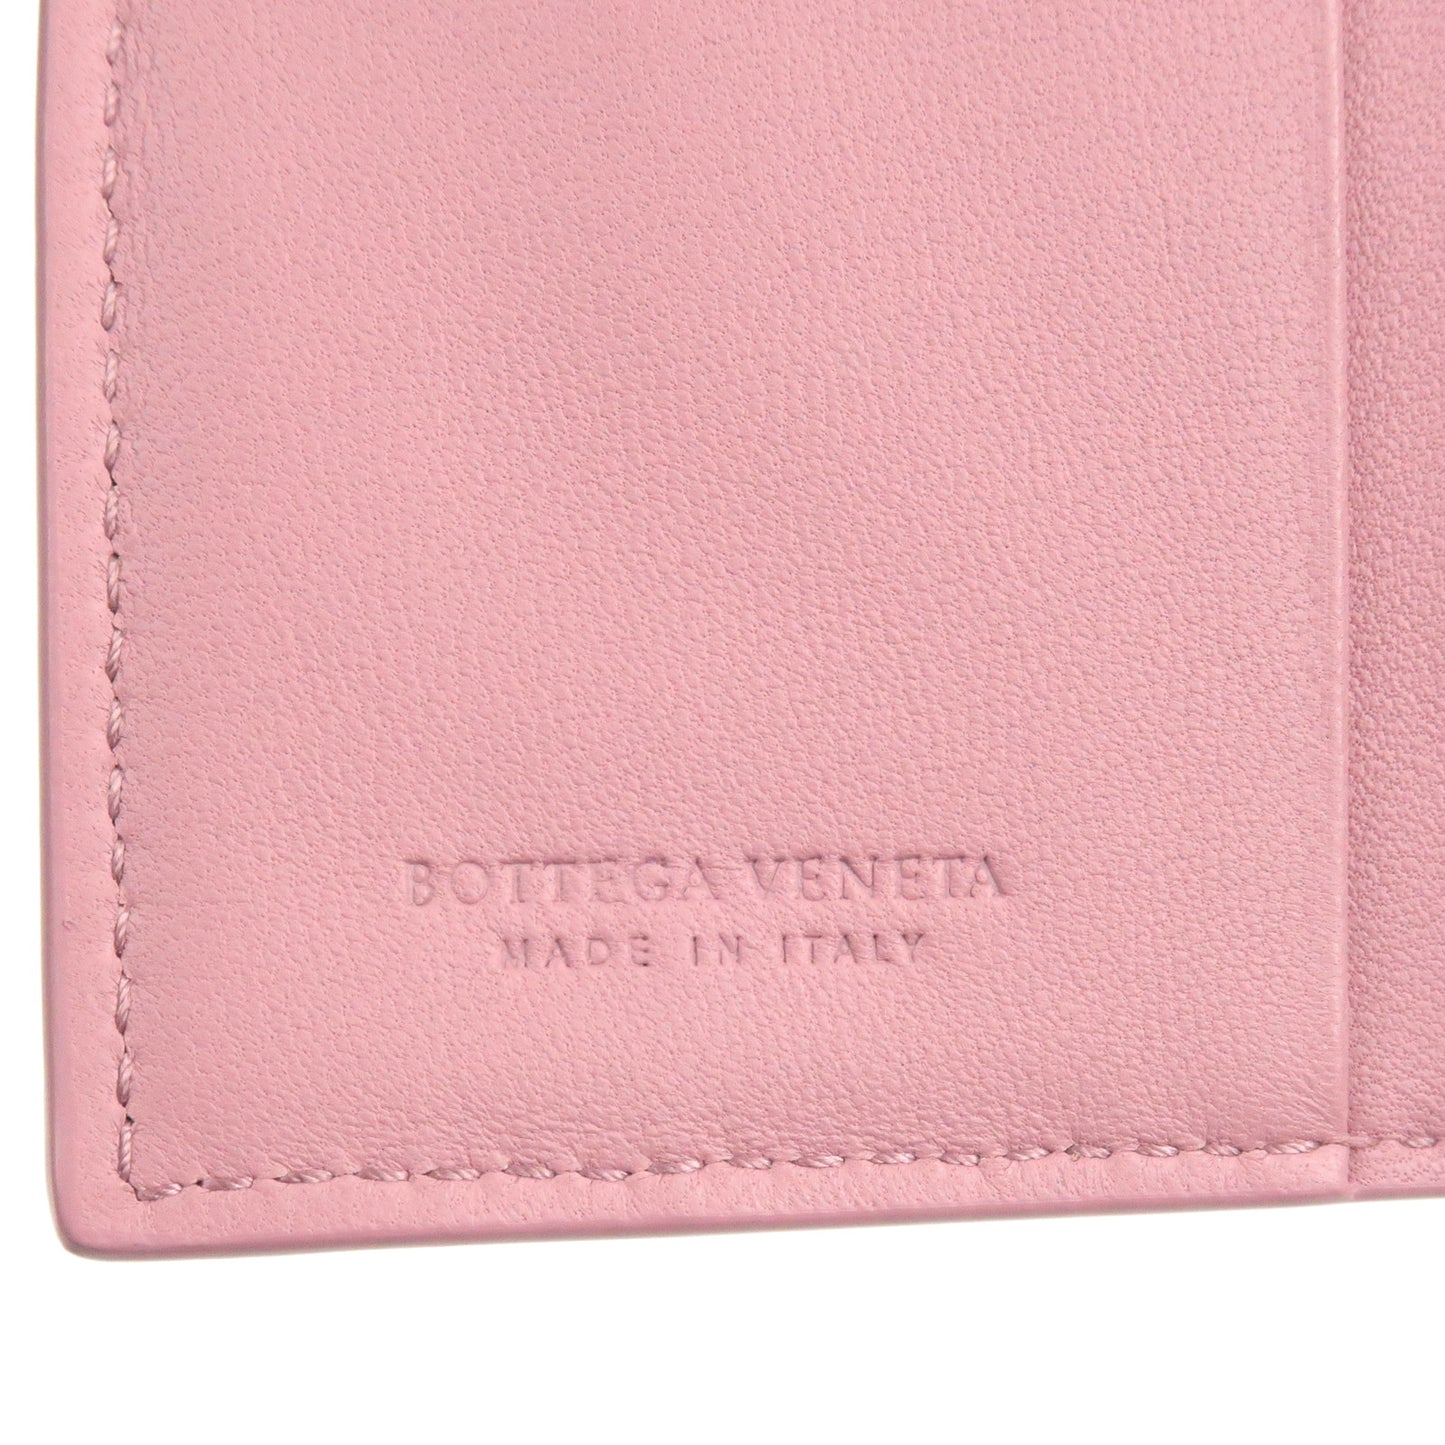 BOTTEGA VENETA Intrecciato Leather Bi-Fold Wallet Pink